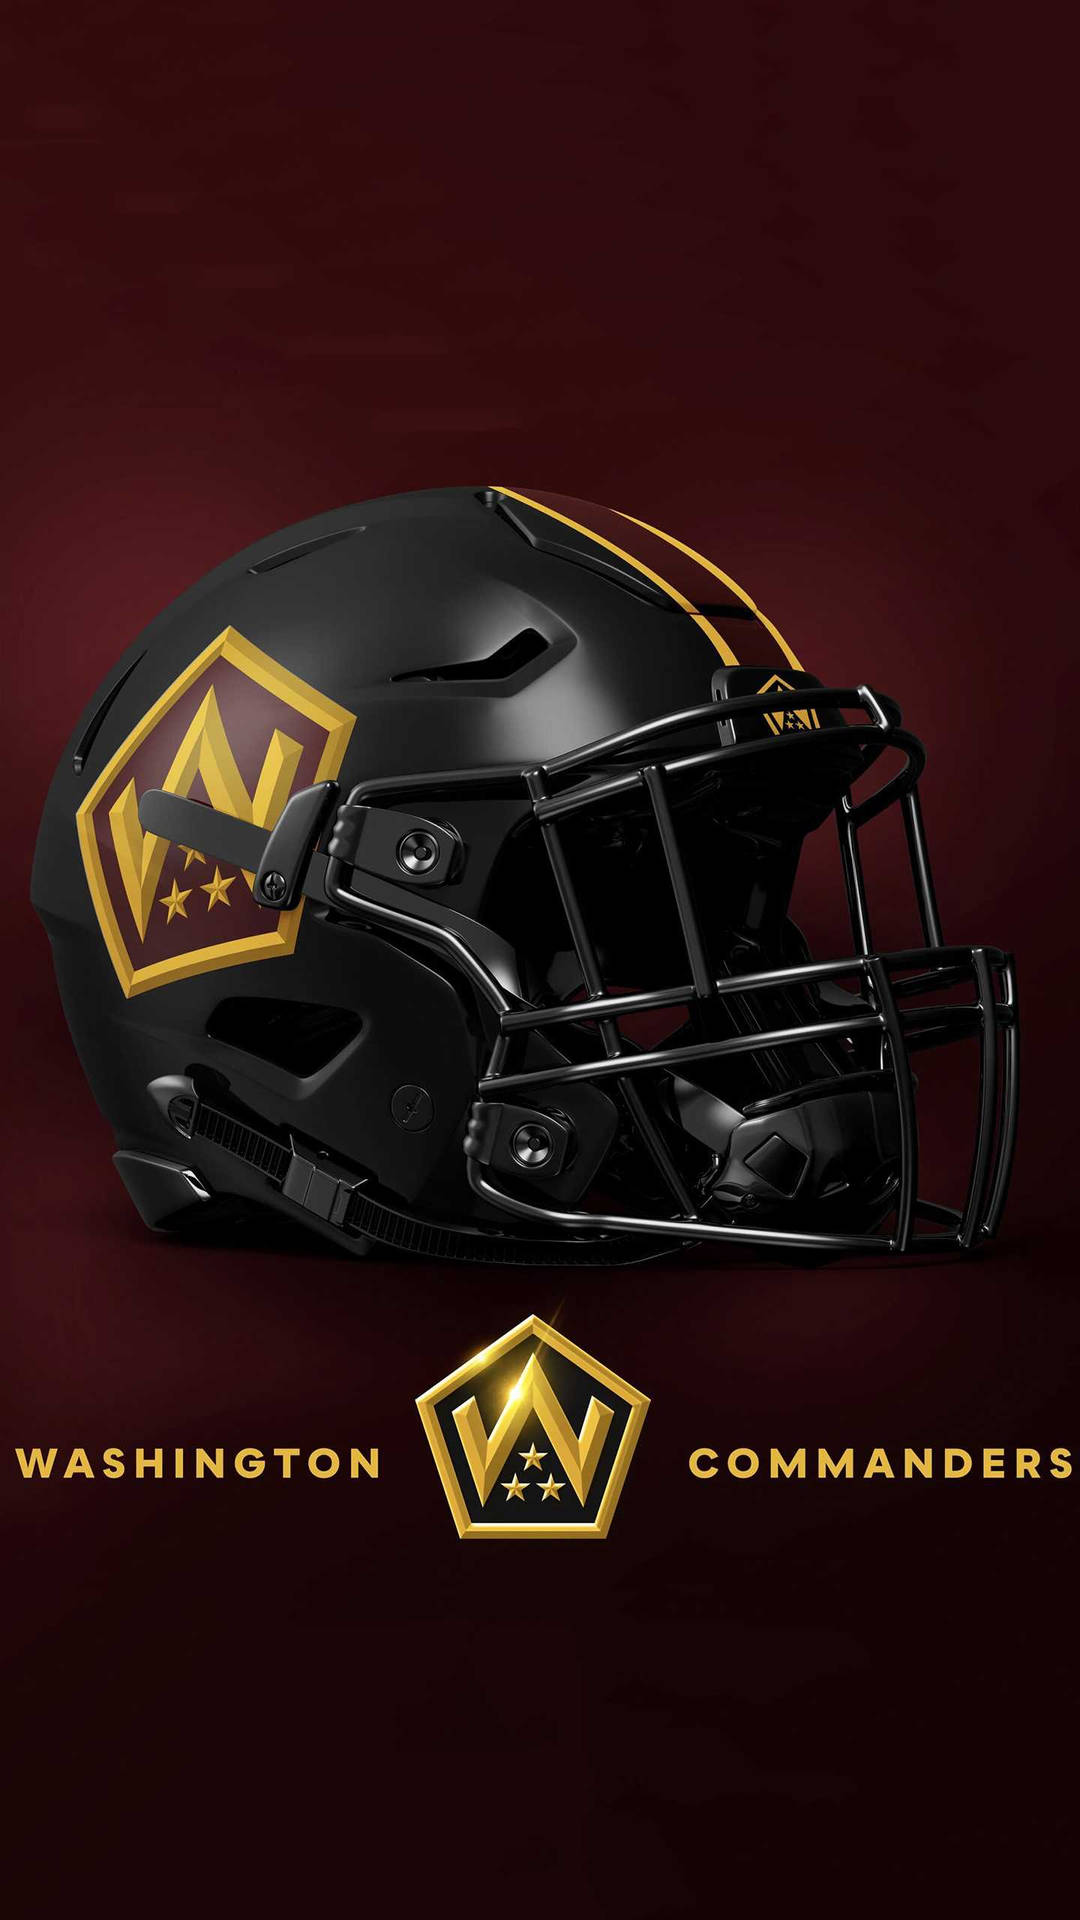 washington commander helmet